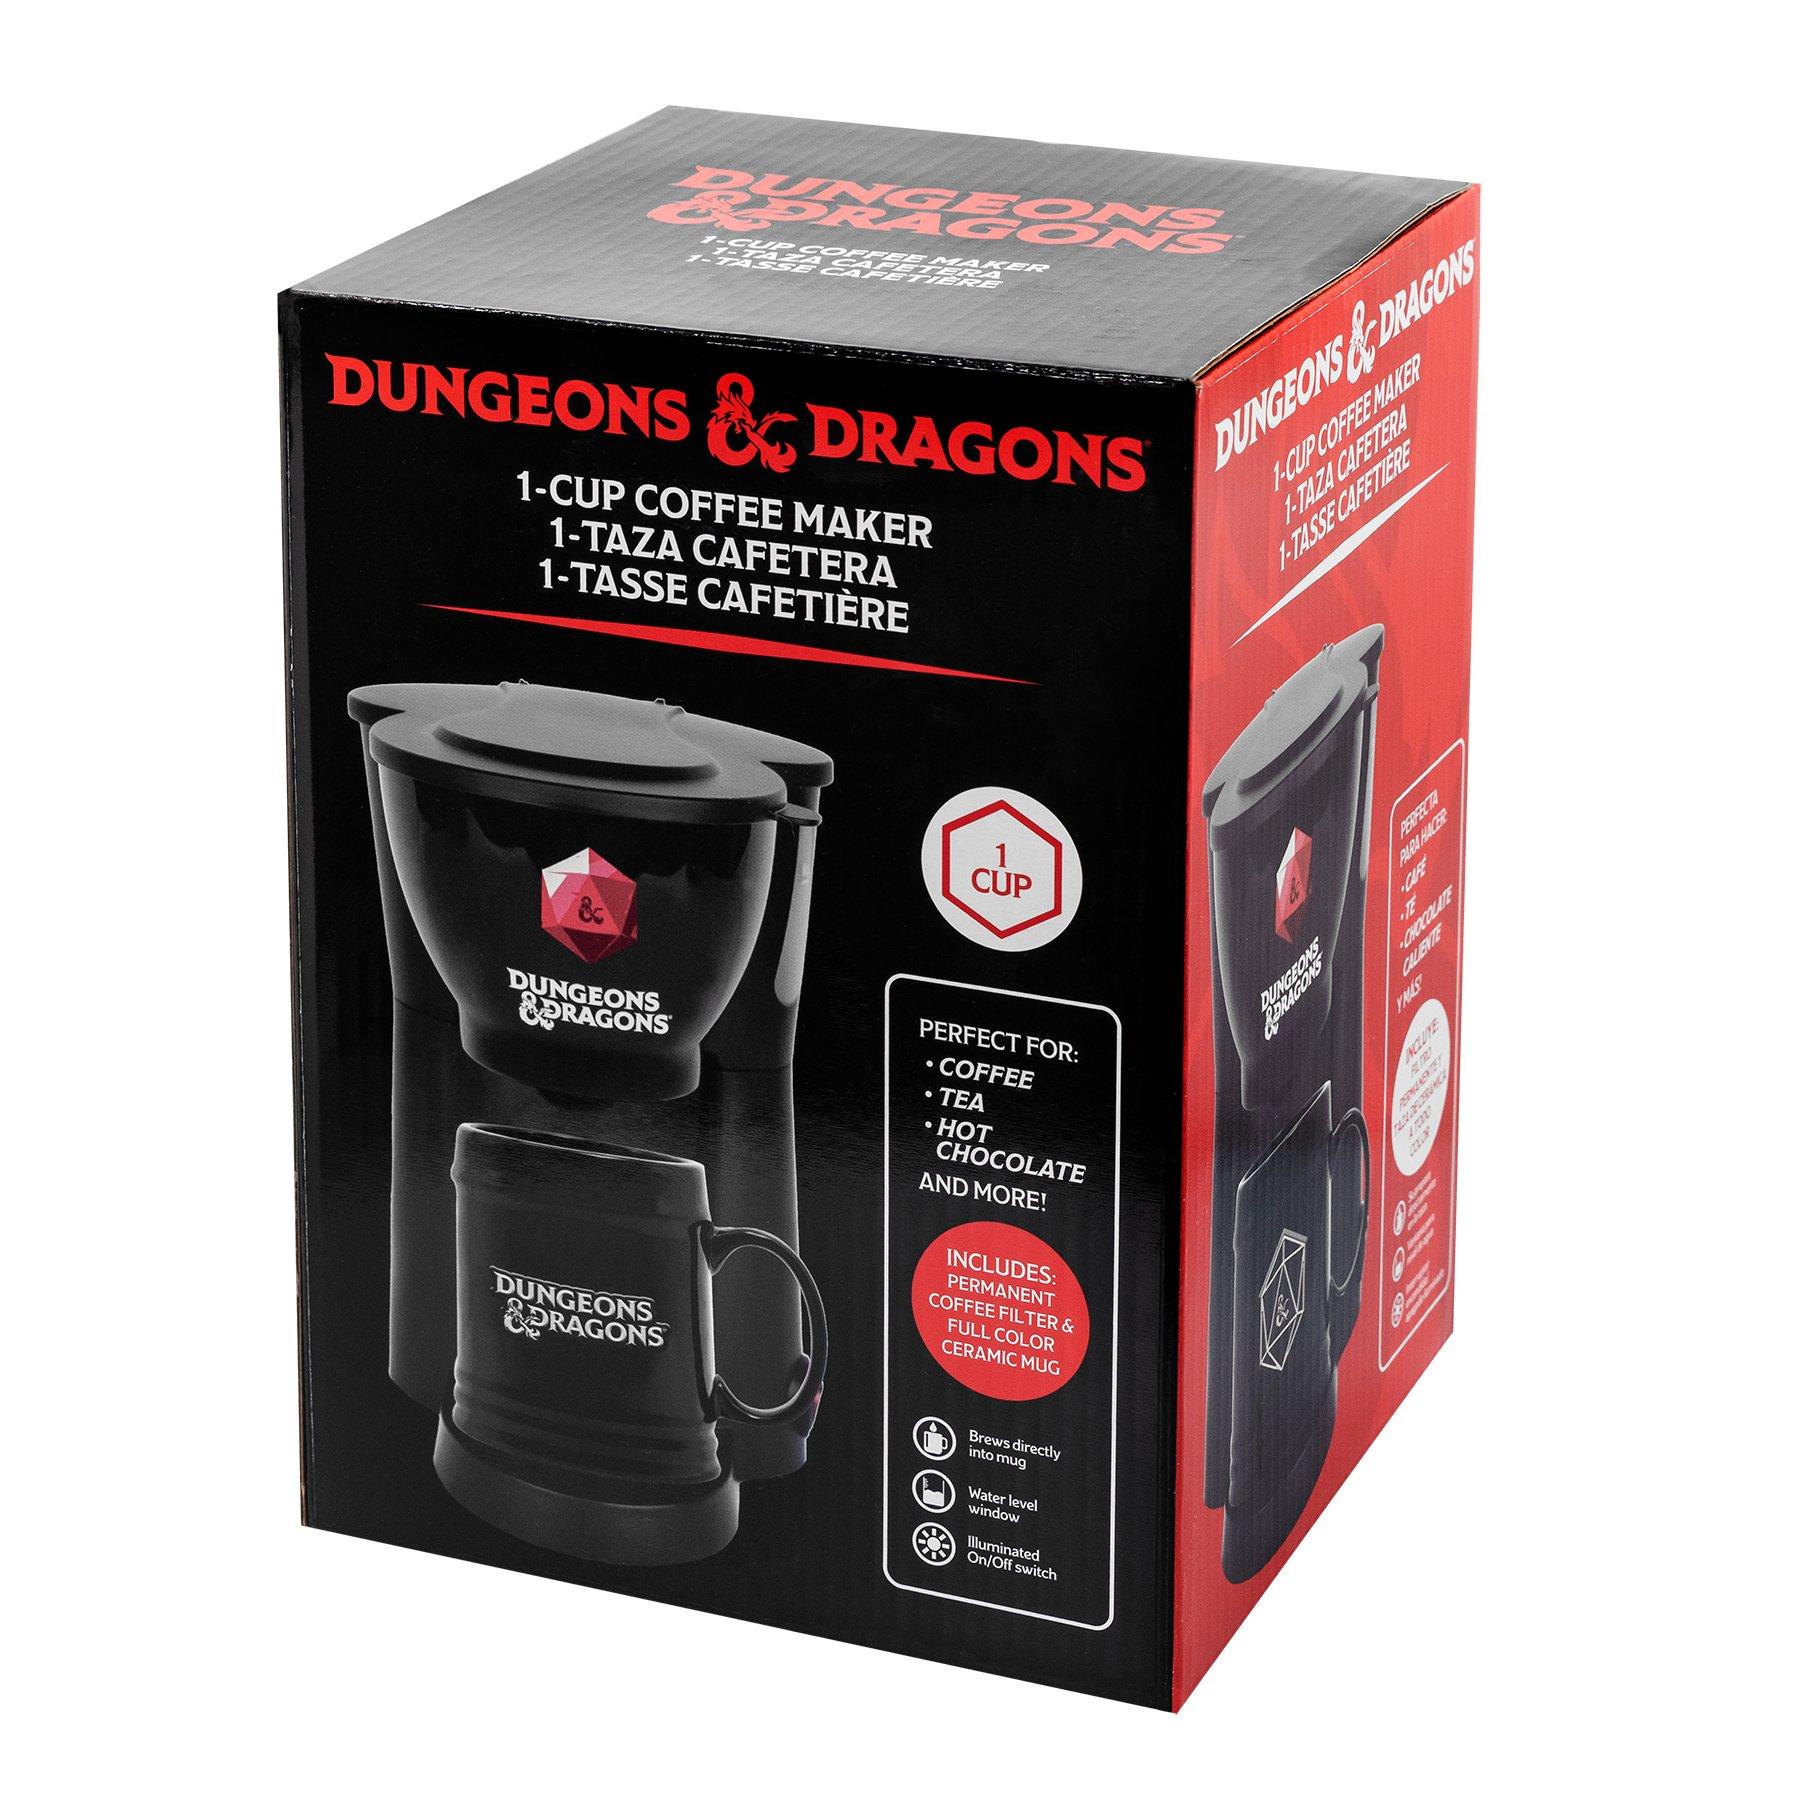 https://media.gamestop.com/i/gamestop/11168014_ALT06/Dungeons-and-Dragons-Coffee-Maker-With-Mug?$pdp$